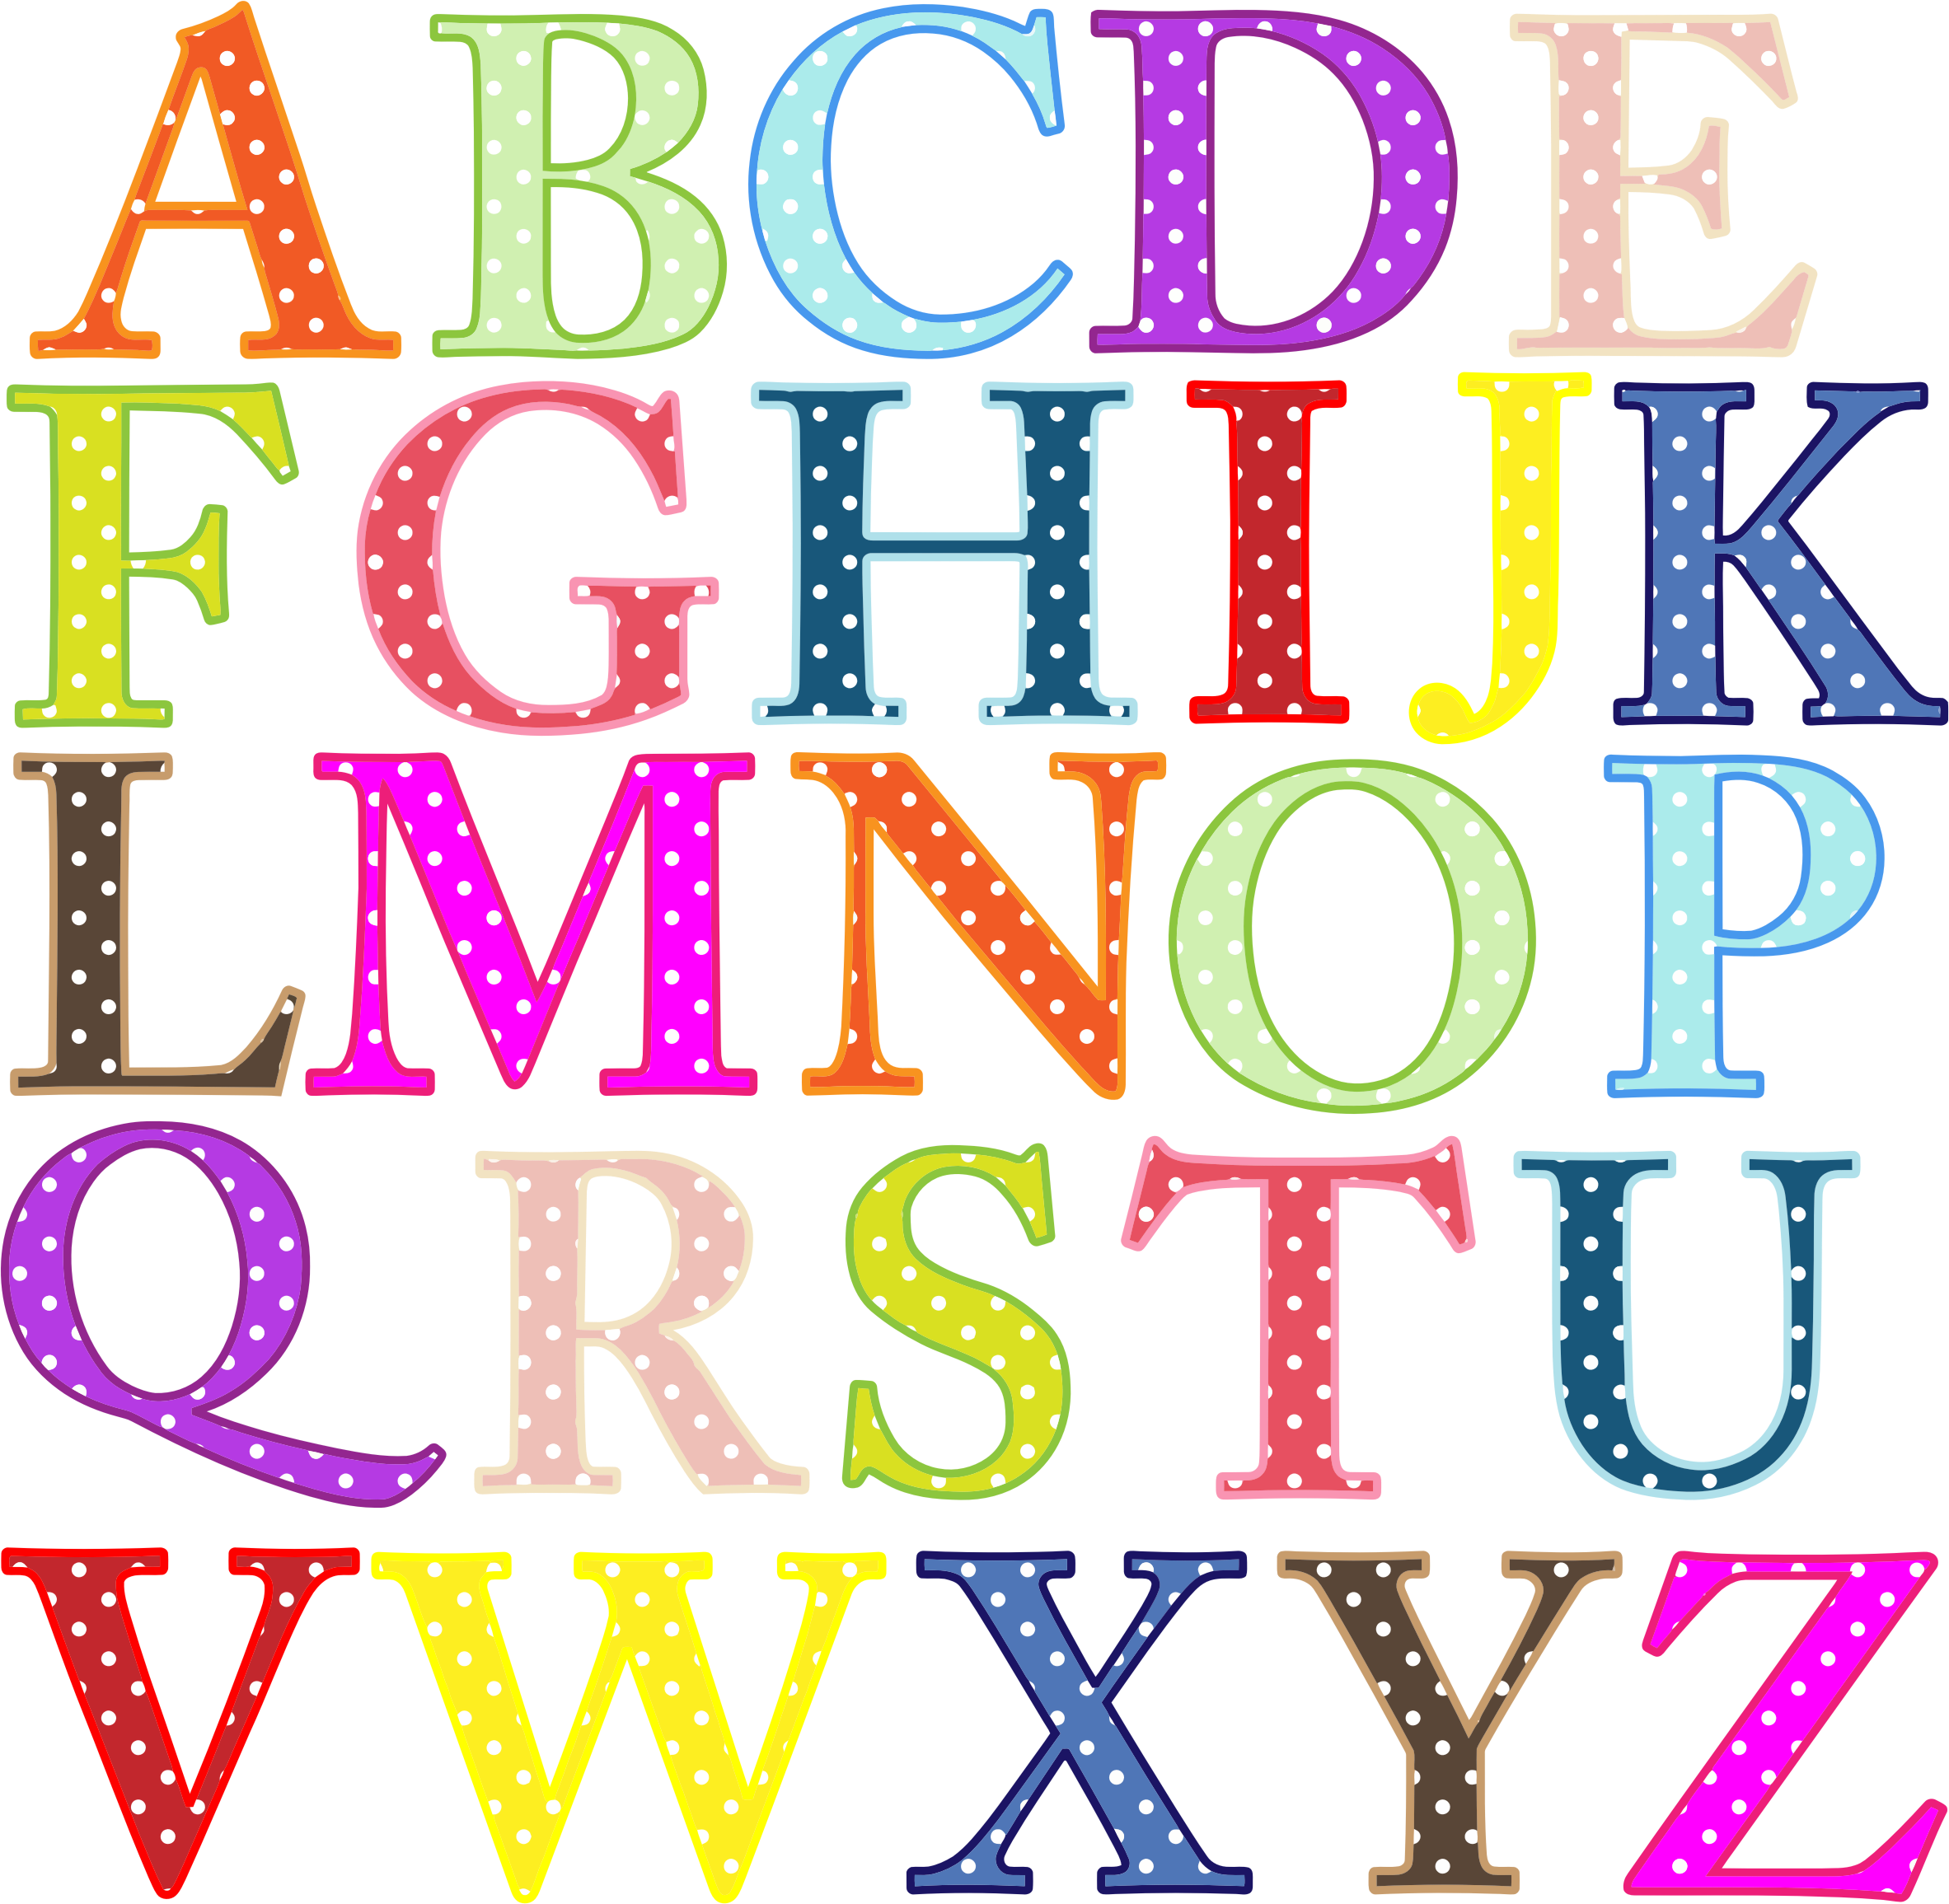 Abc clipart uppercase letter, Abc uppercase letter